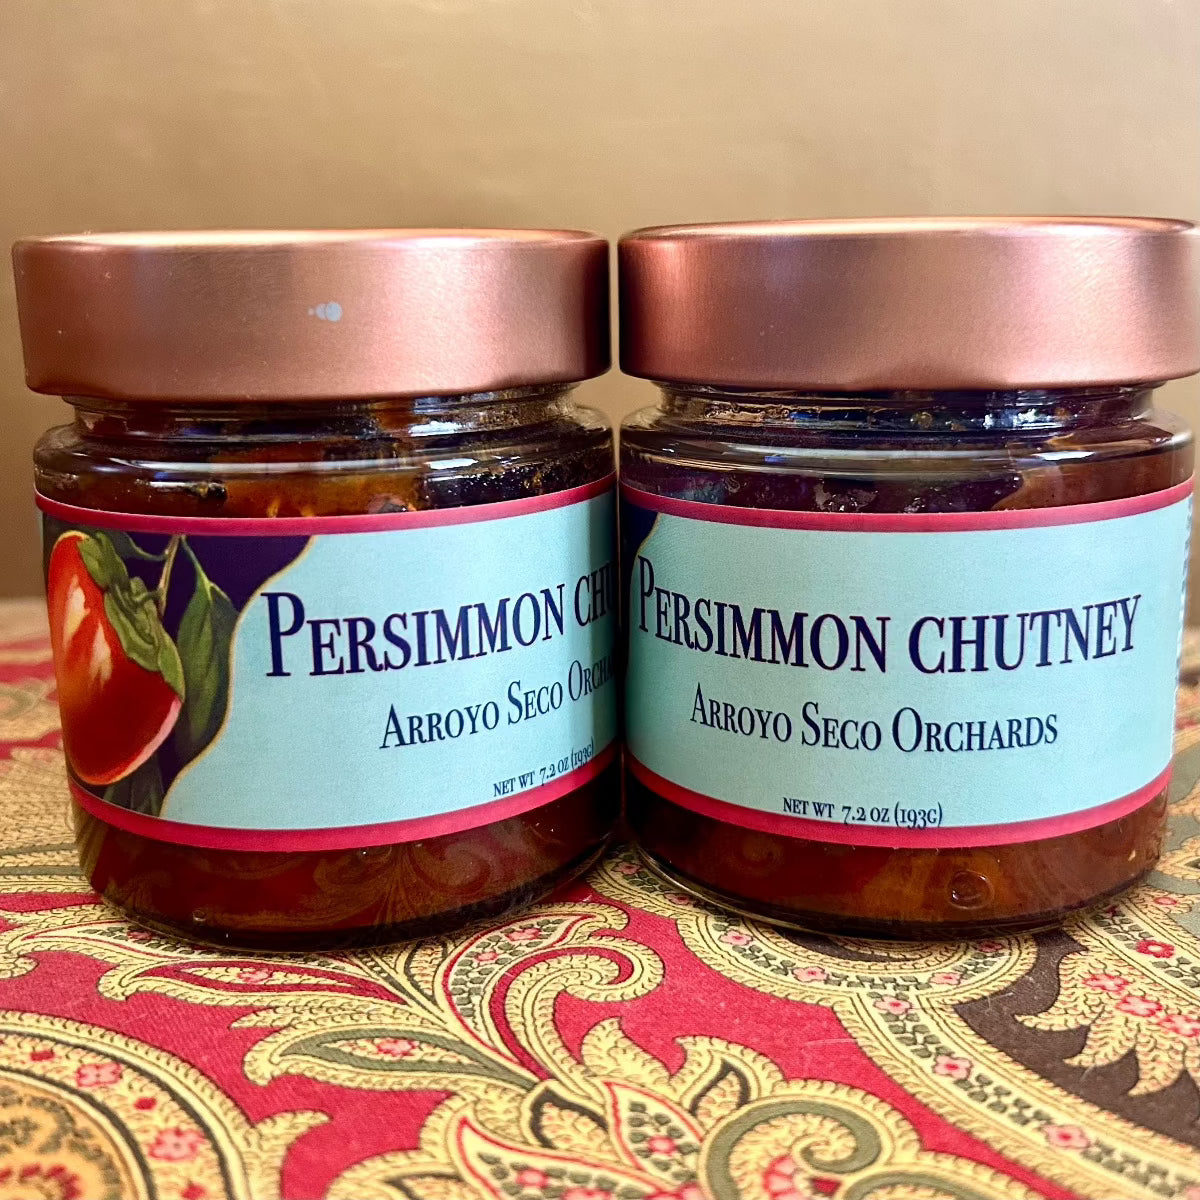 Persimmon Chutney